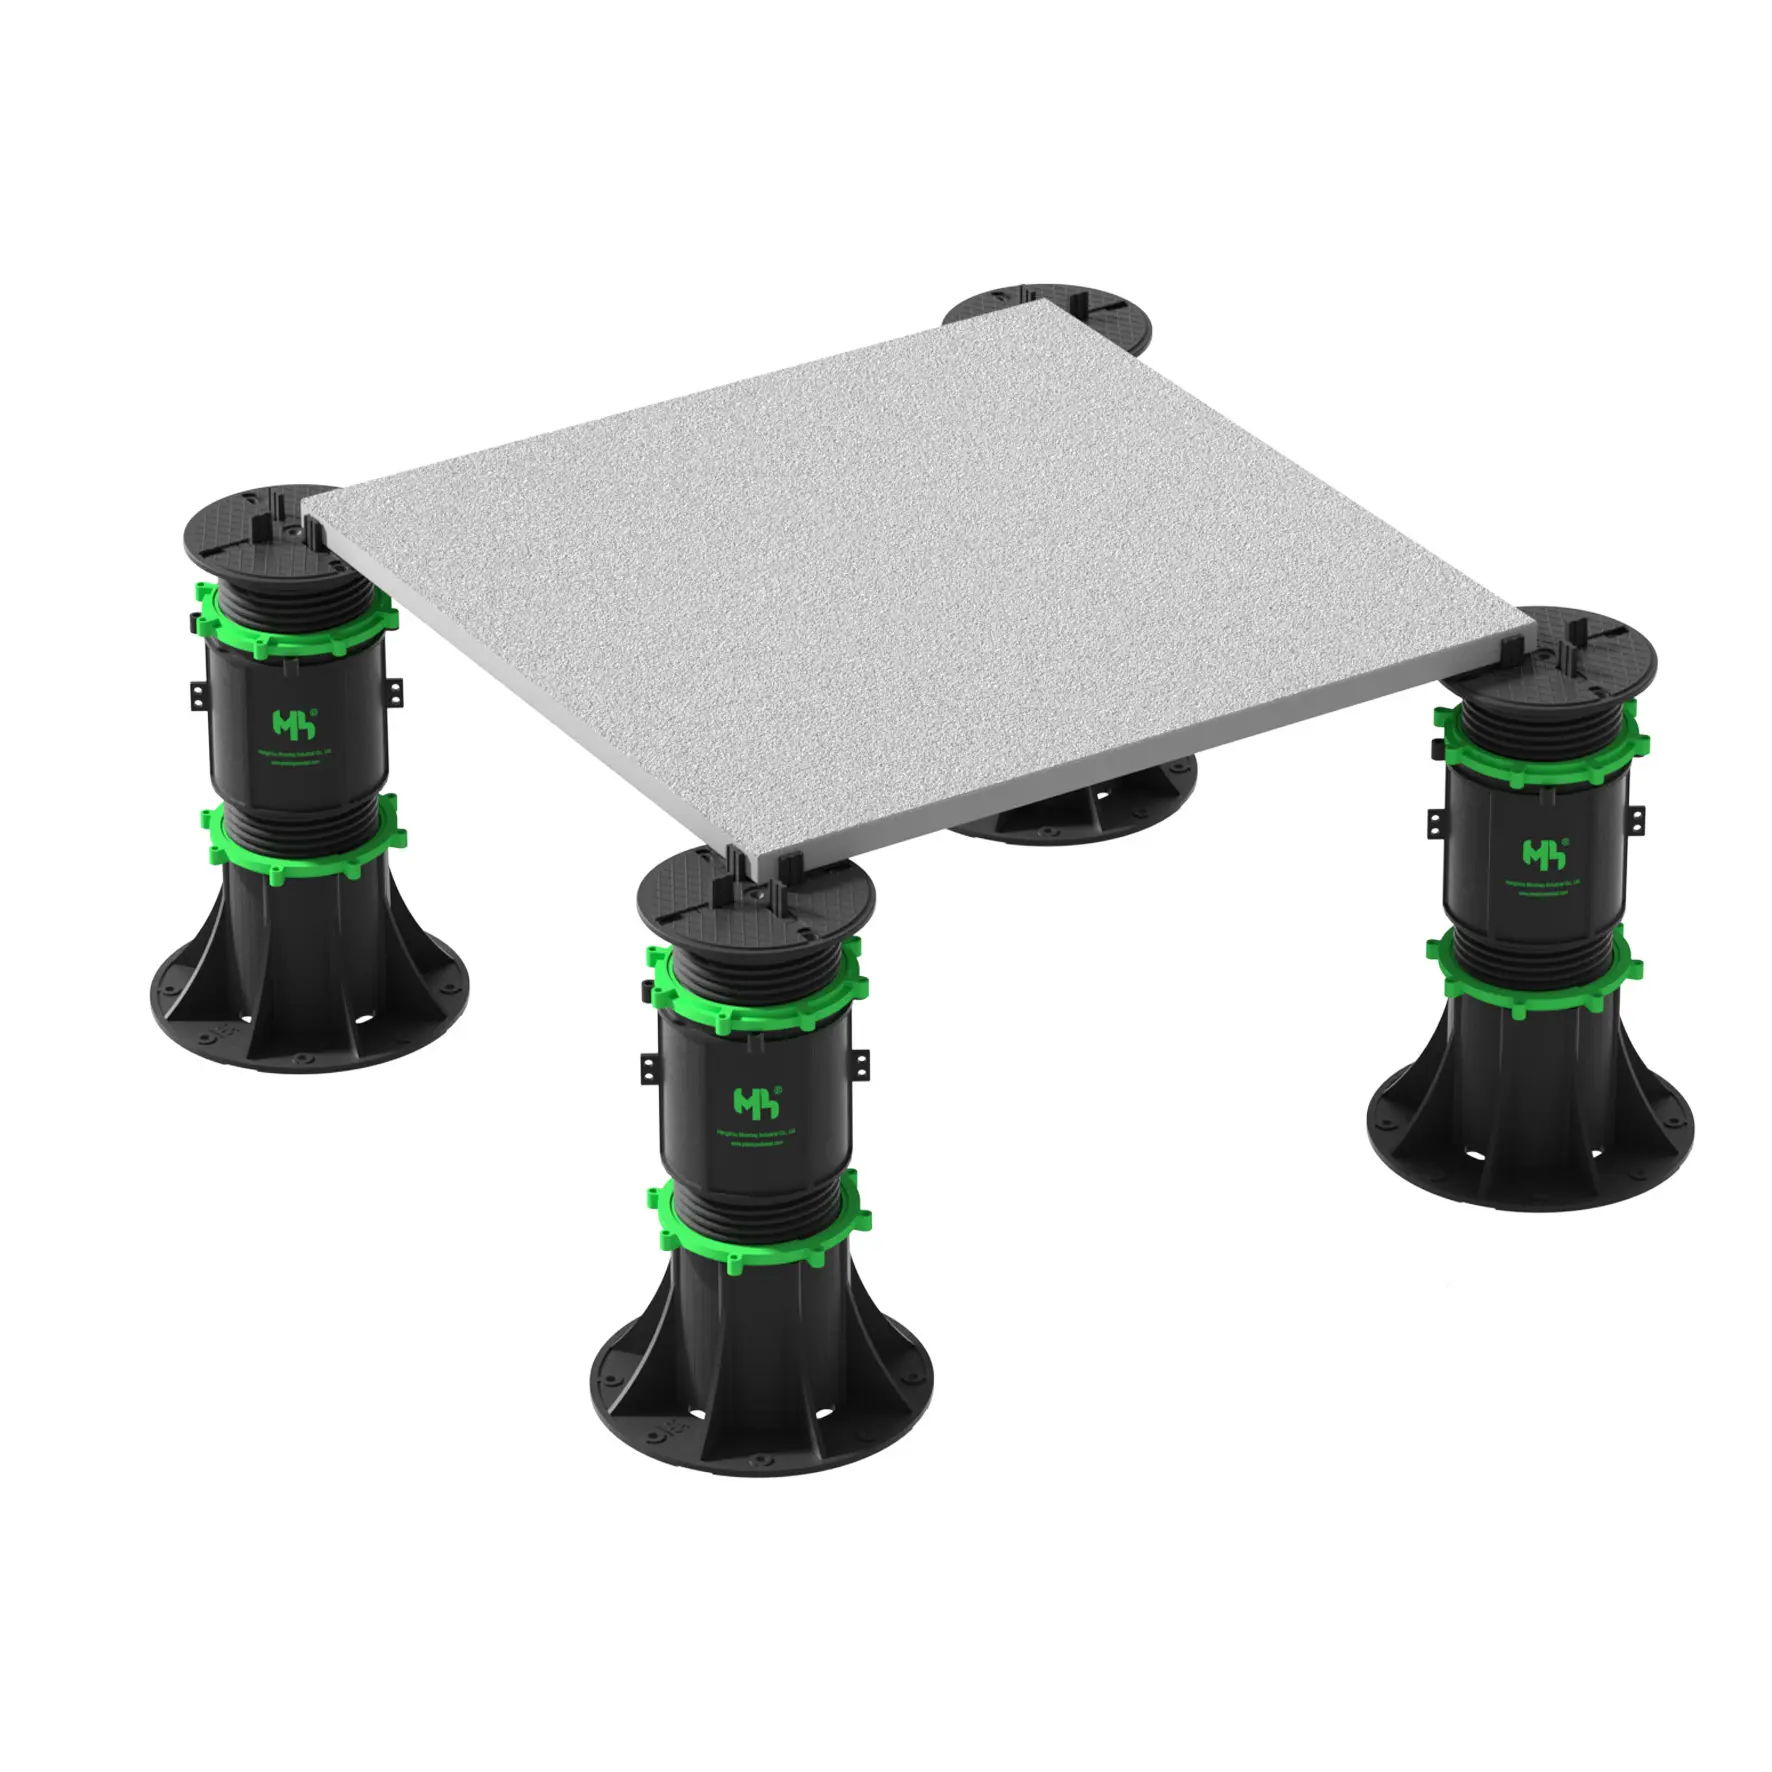 Tile support plastic flooring adjustable raise access floor pedestal for roof terrace